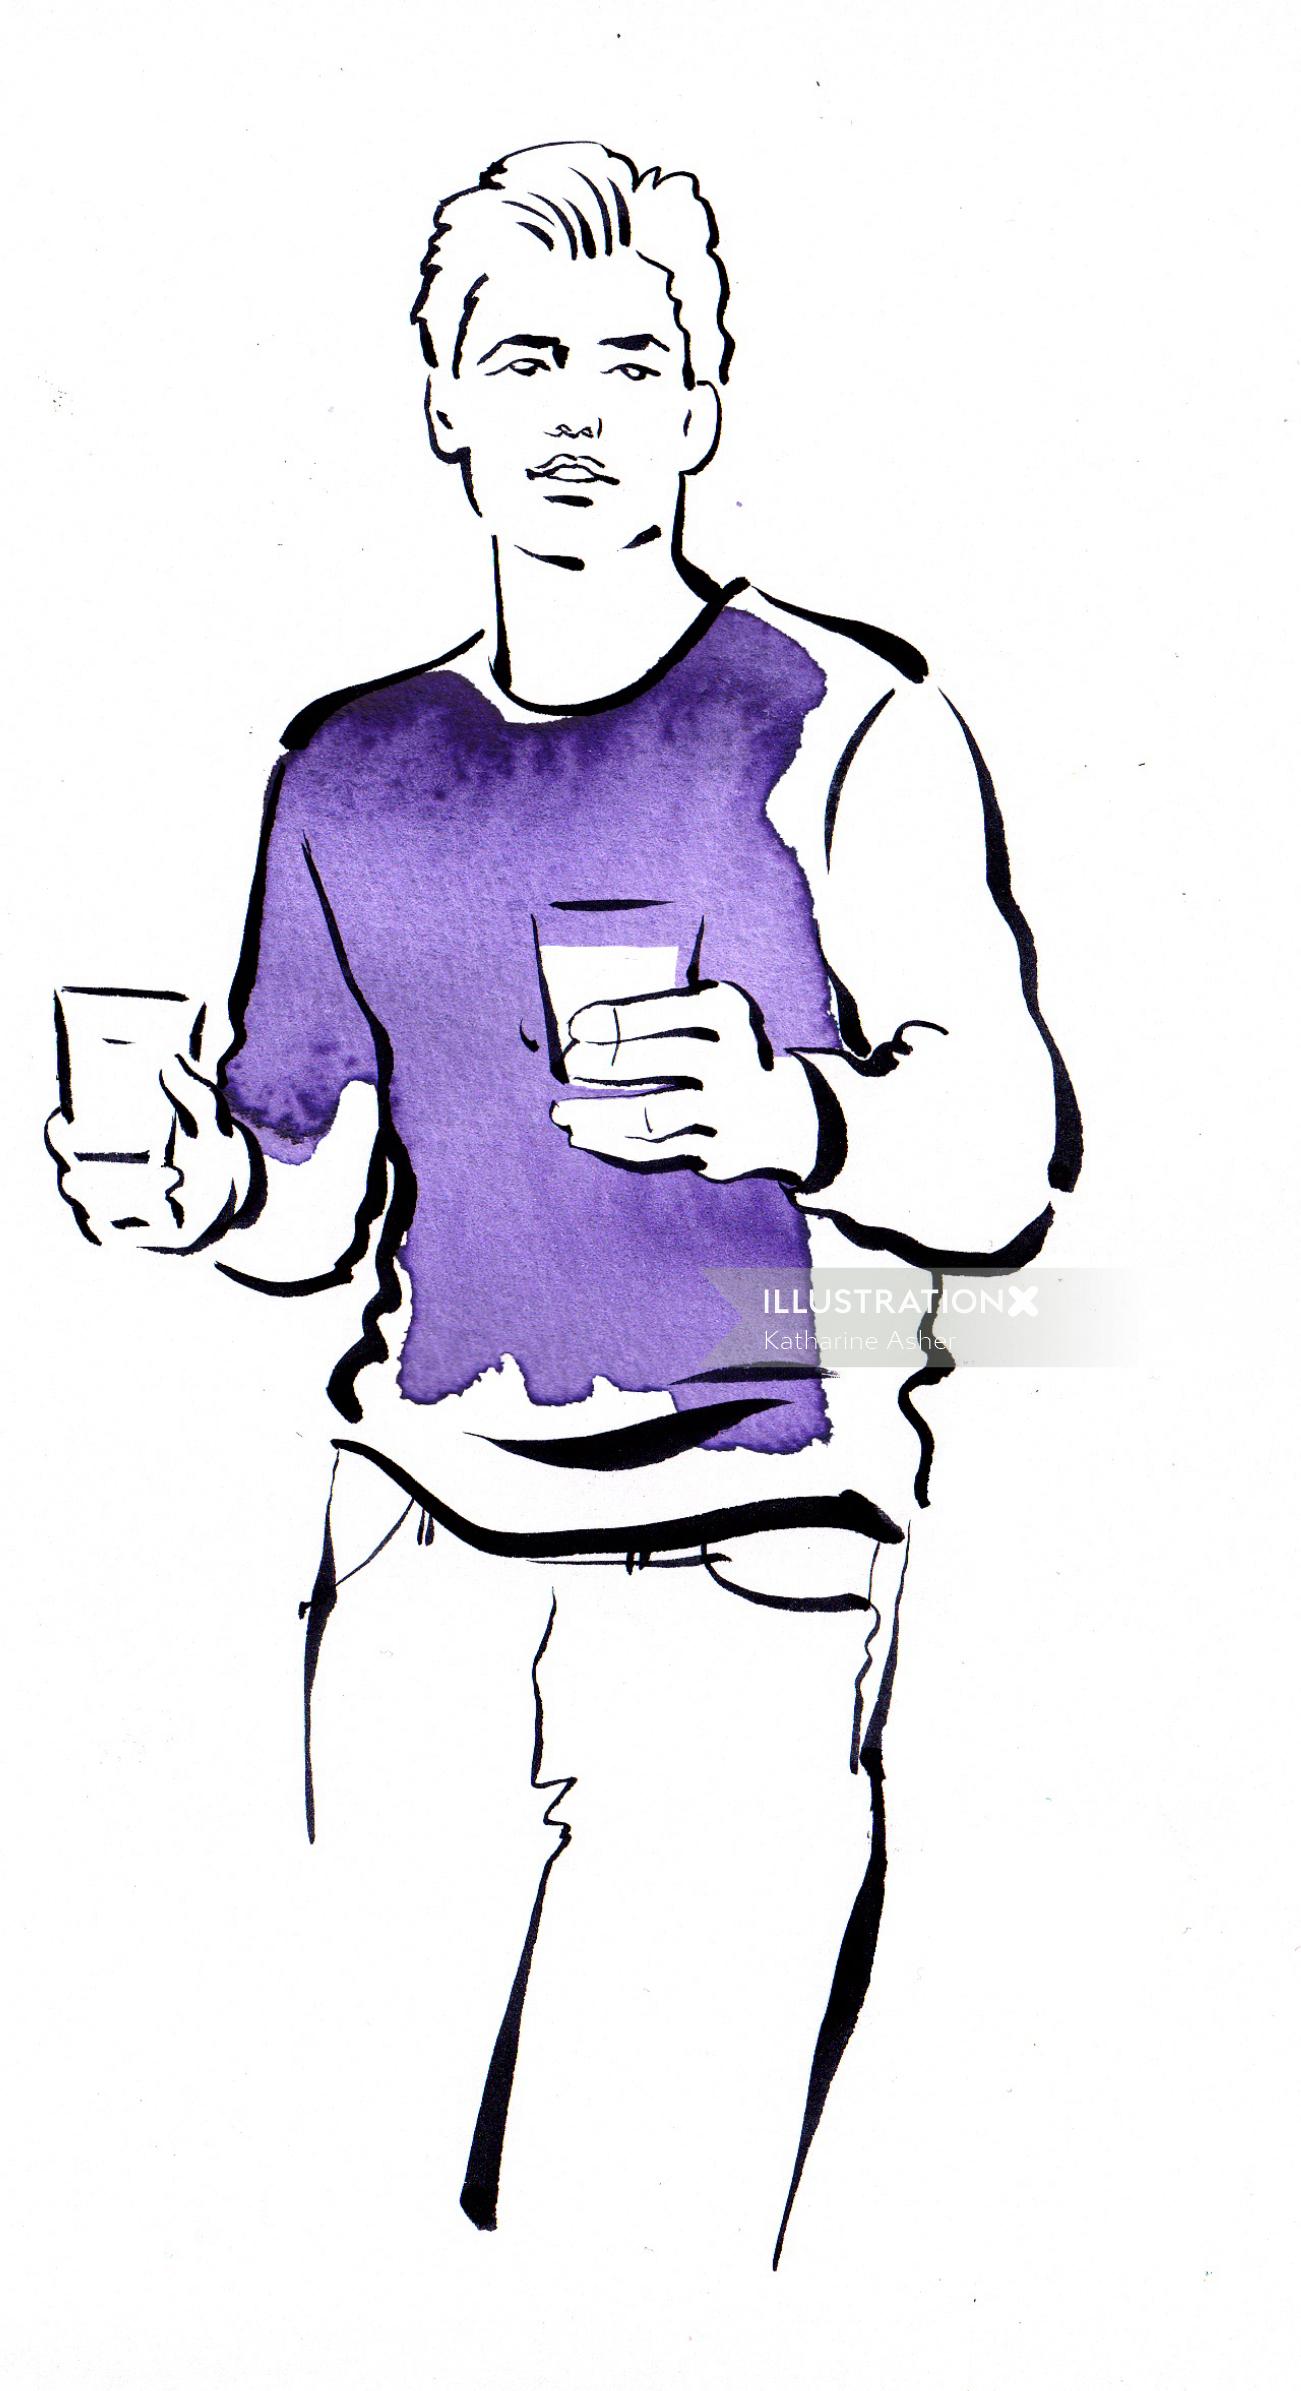 Man fashion illustration by Katharine Asher